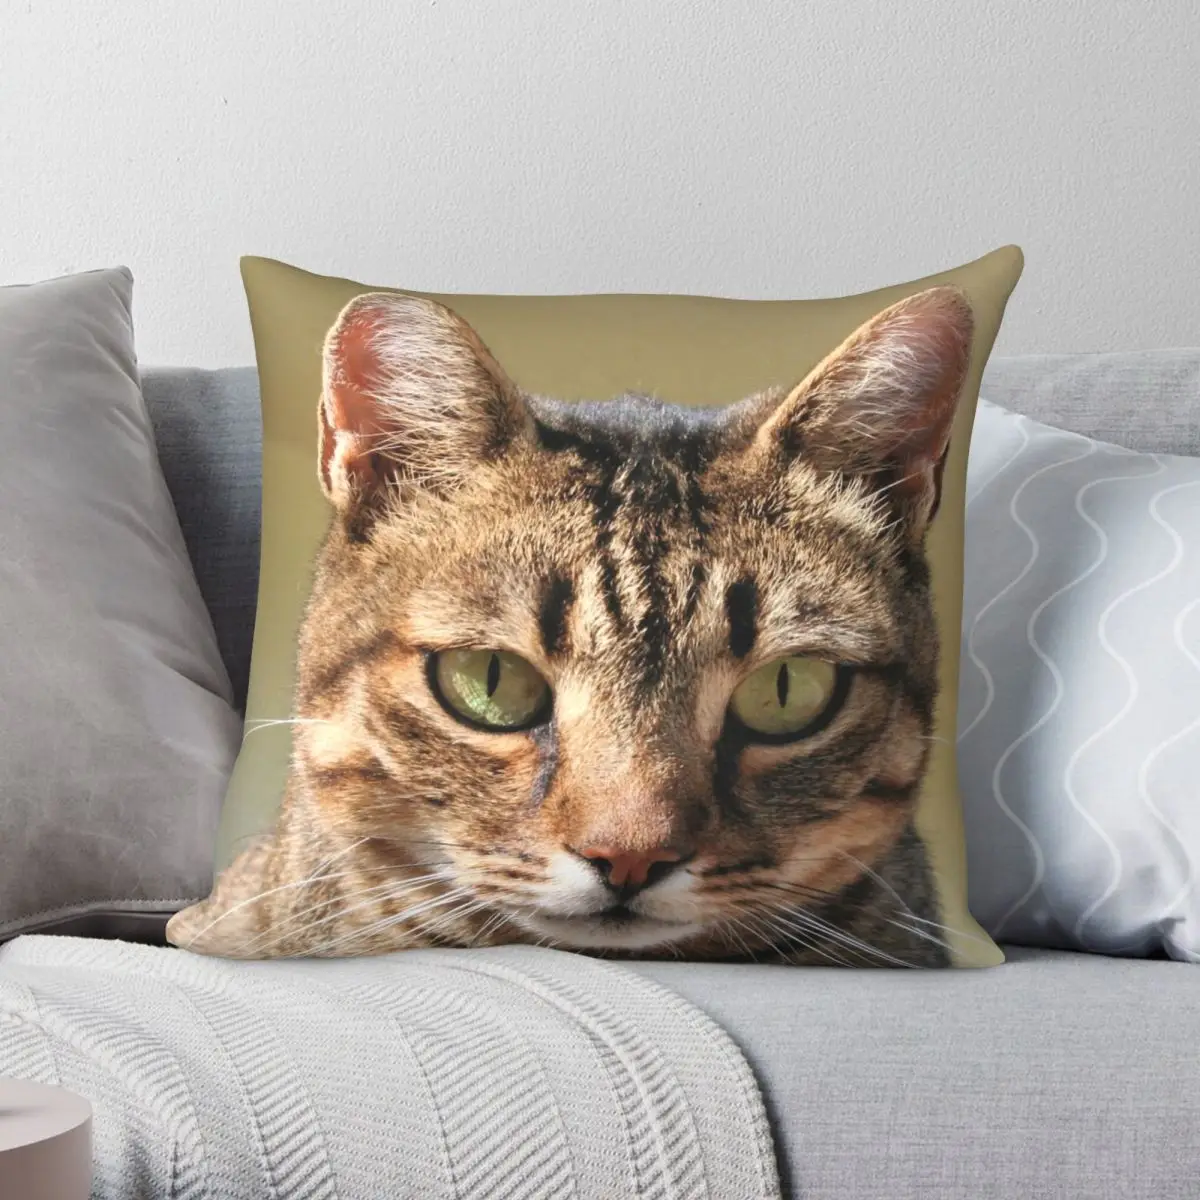 

Portrait Of A Cute Tabby Cat Square Pillowcase Polyester Linen Velvet Printed Zip Decor Pillow Case Room Cushion Case 18"